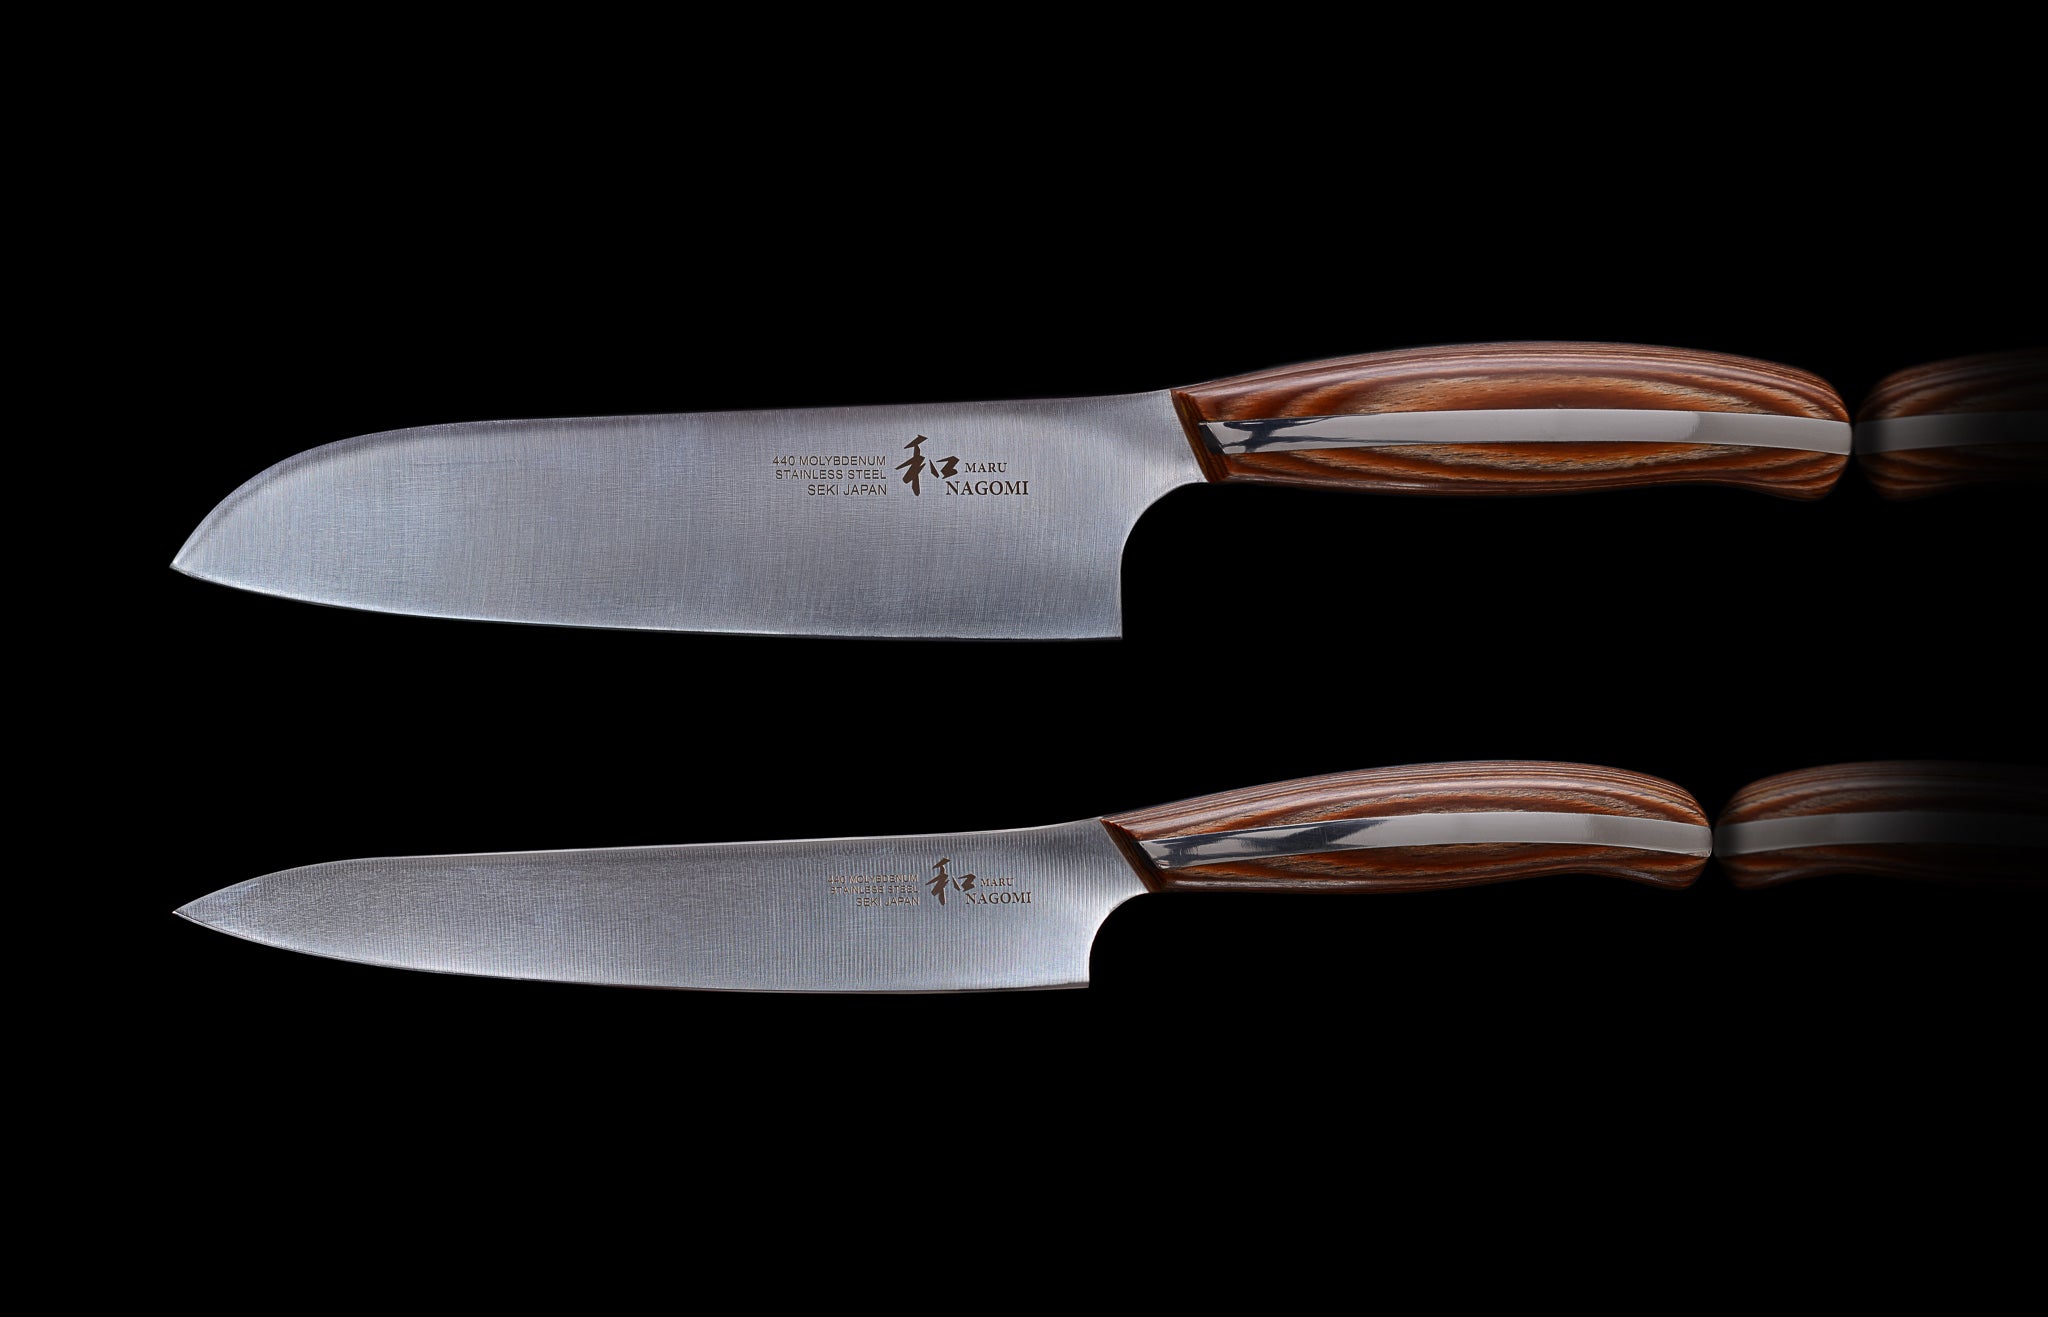 Cutlery 2-Piece Santoku Knife Set